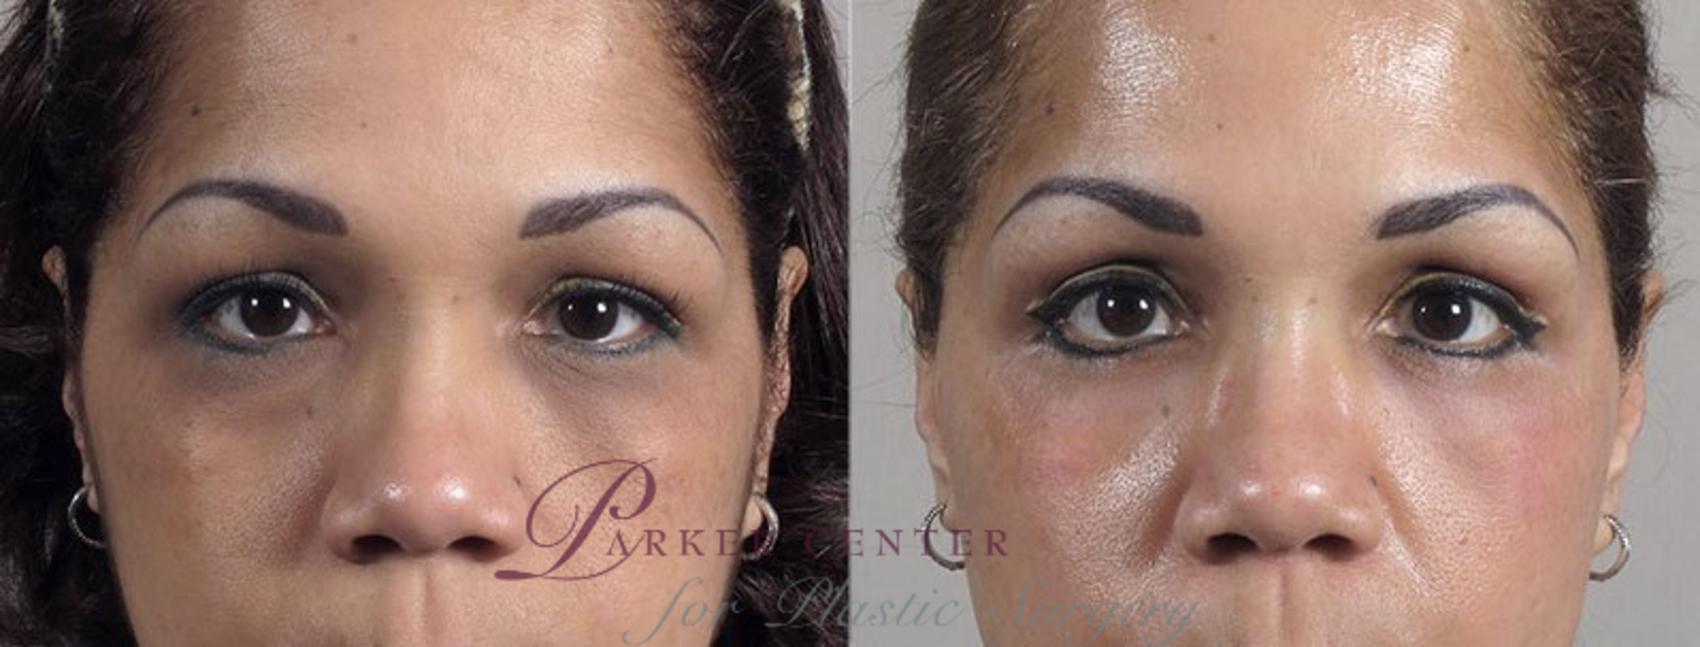 Eyelid Lift Case 105 Before & After View #1 | Paramus, NJ | Parker Center for Plastic Surgery